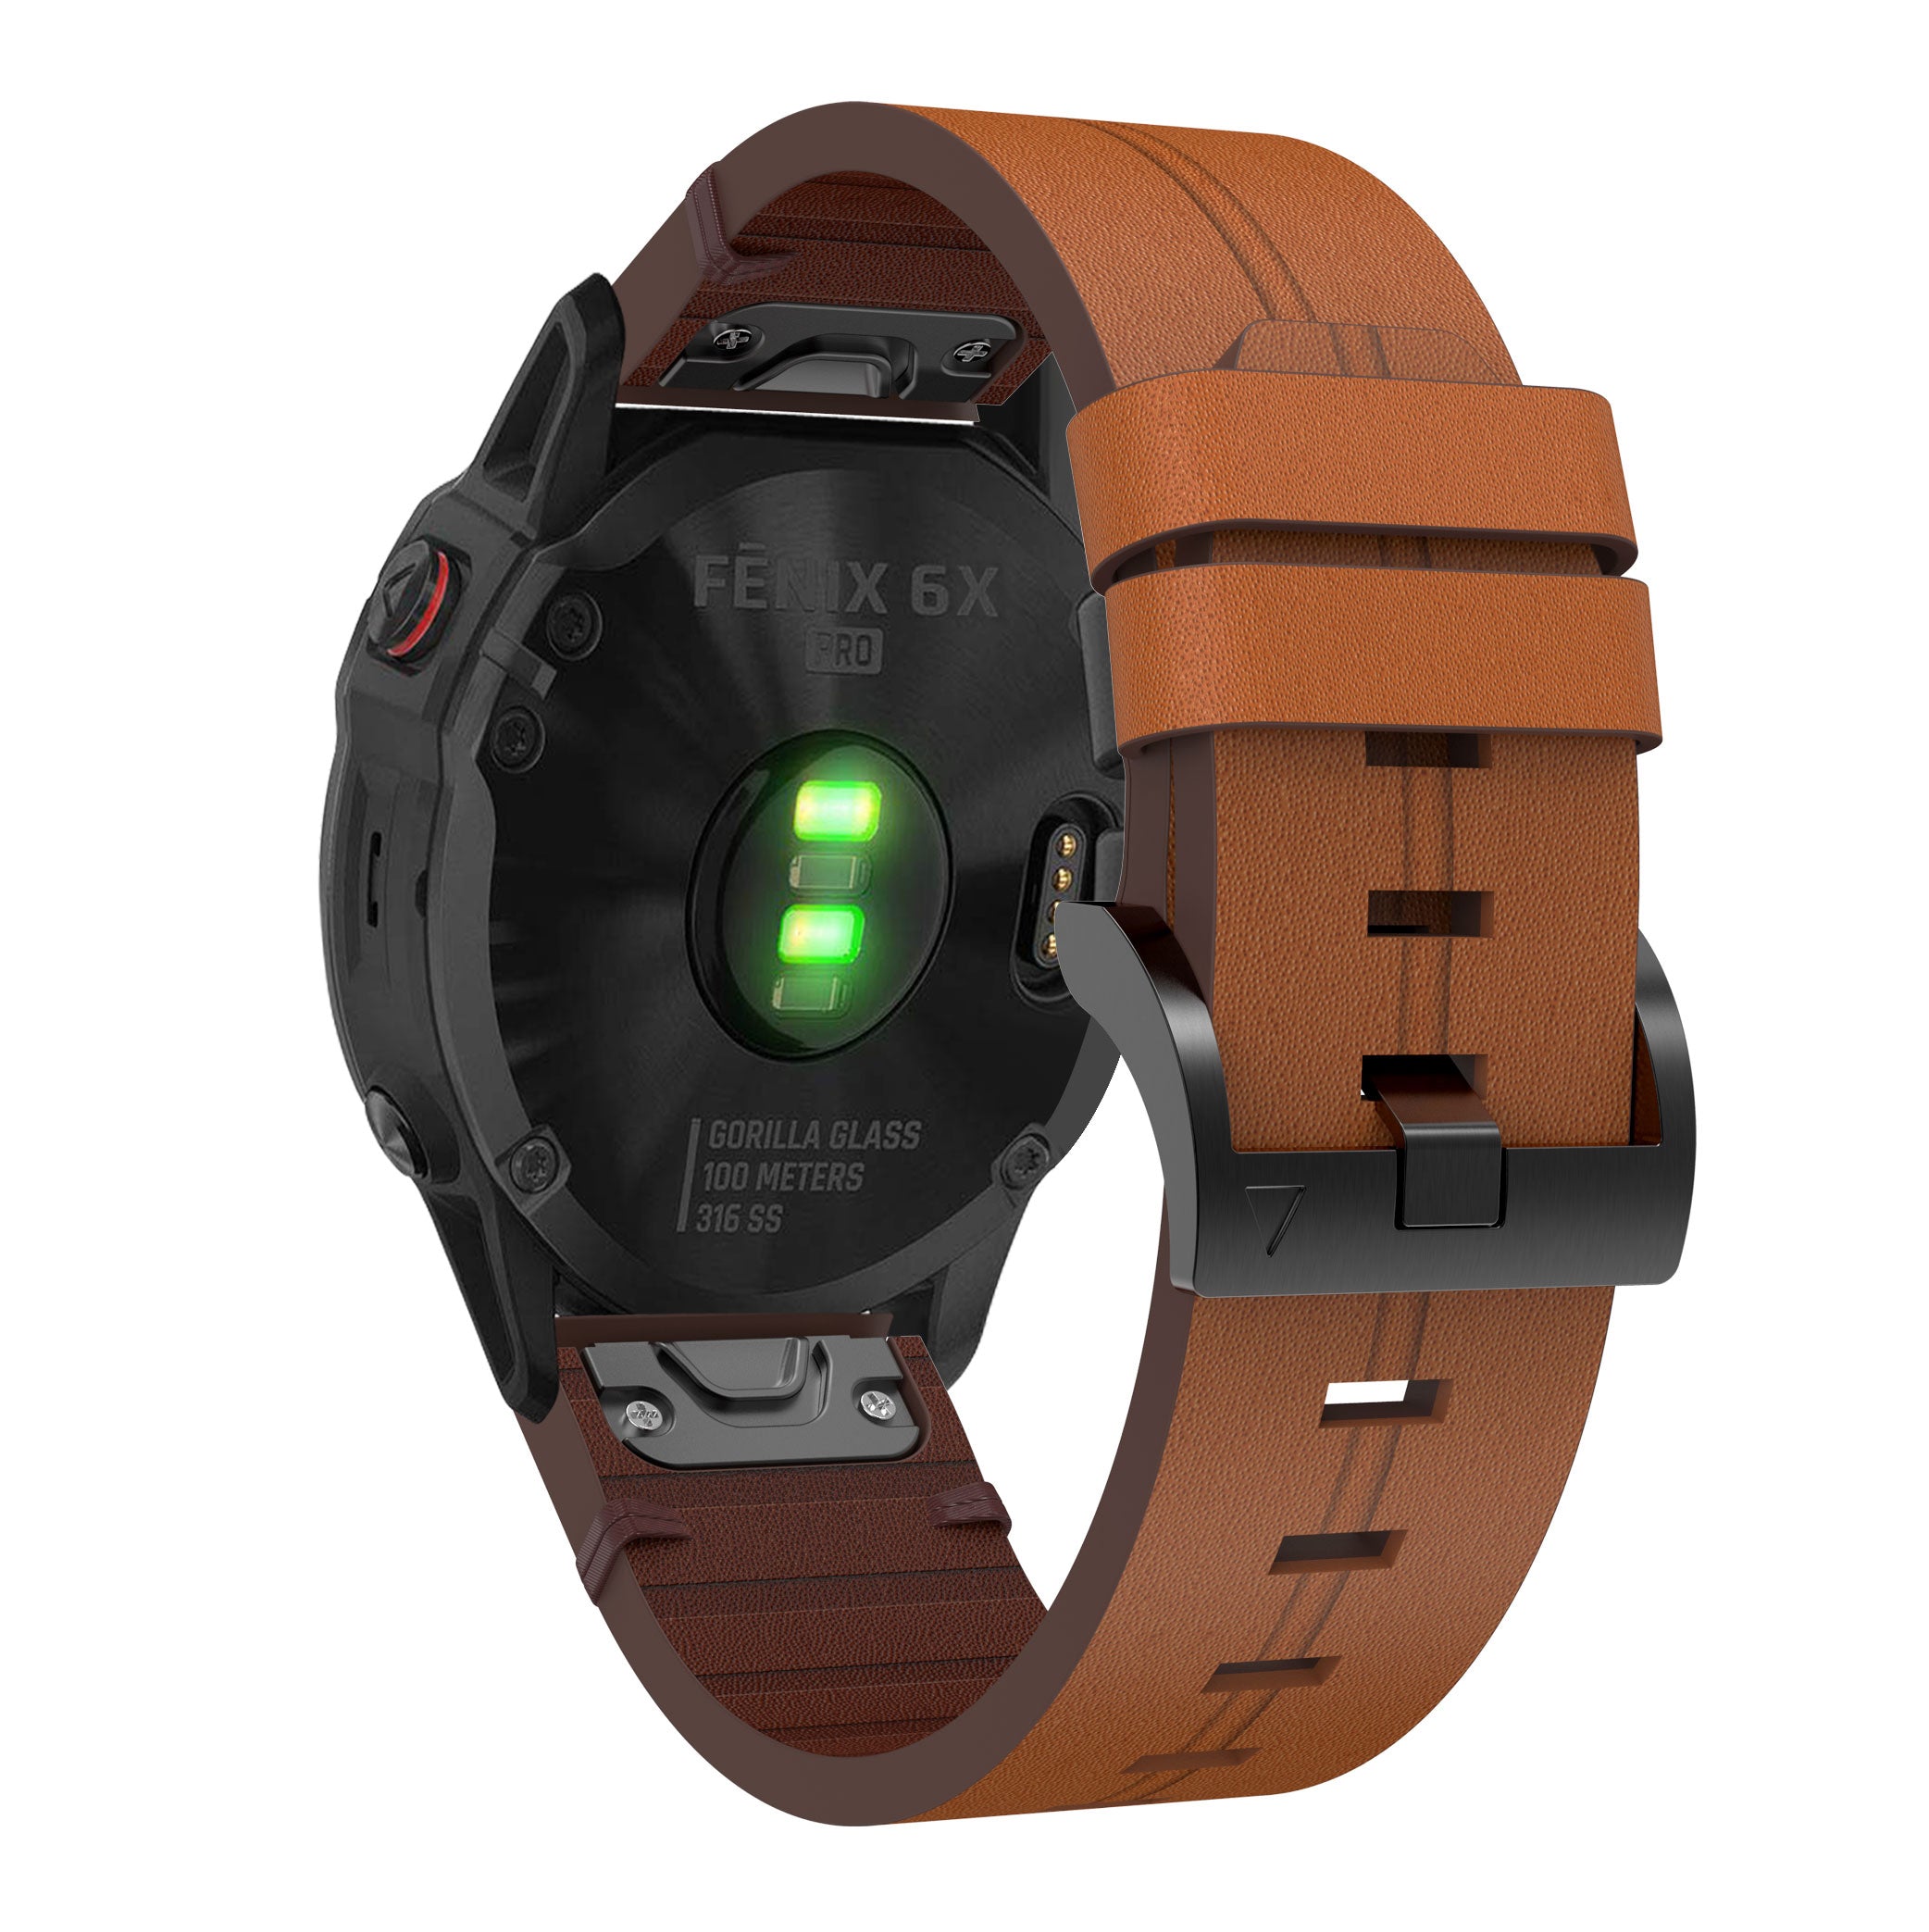 For Garmin Fenix 6X Genuine Leather Smart Watch Replacement Band Wrist Strap - Brown